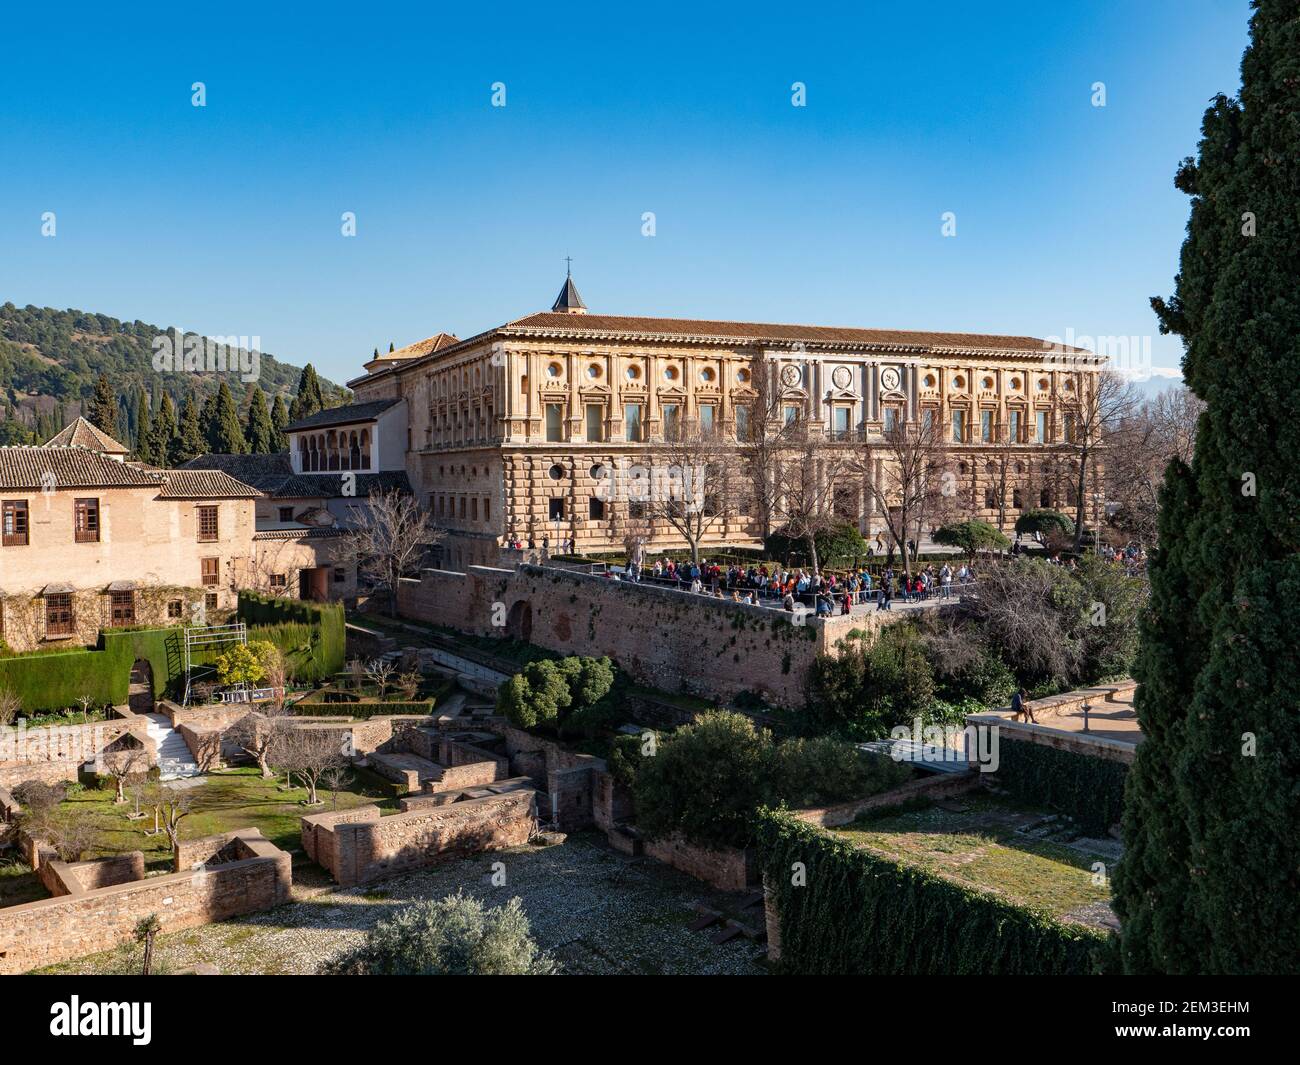 The Palace of King Charles V at The Alhambra, Granada Spain. Stock Photo